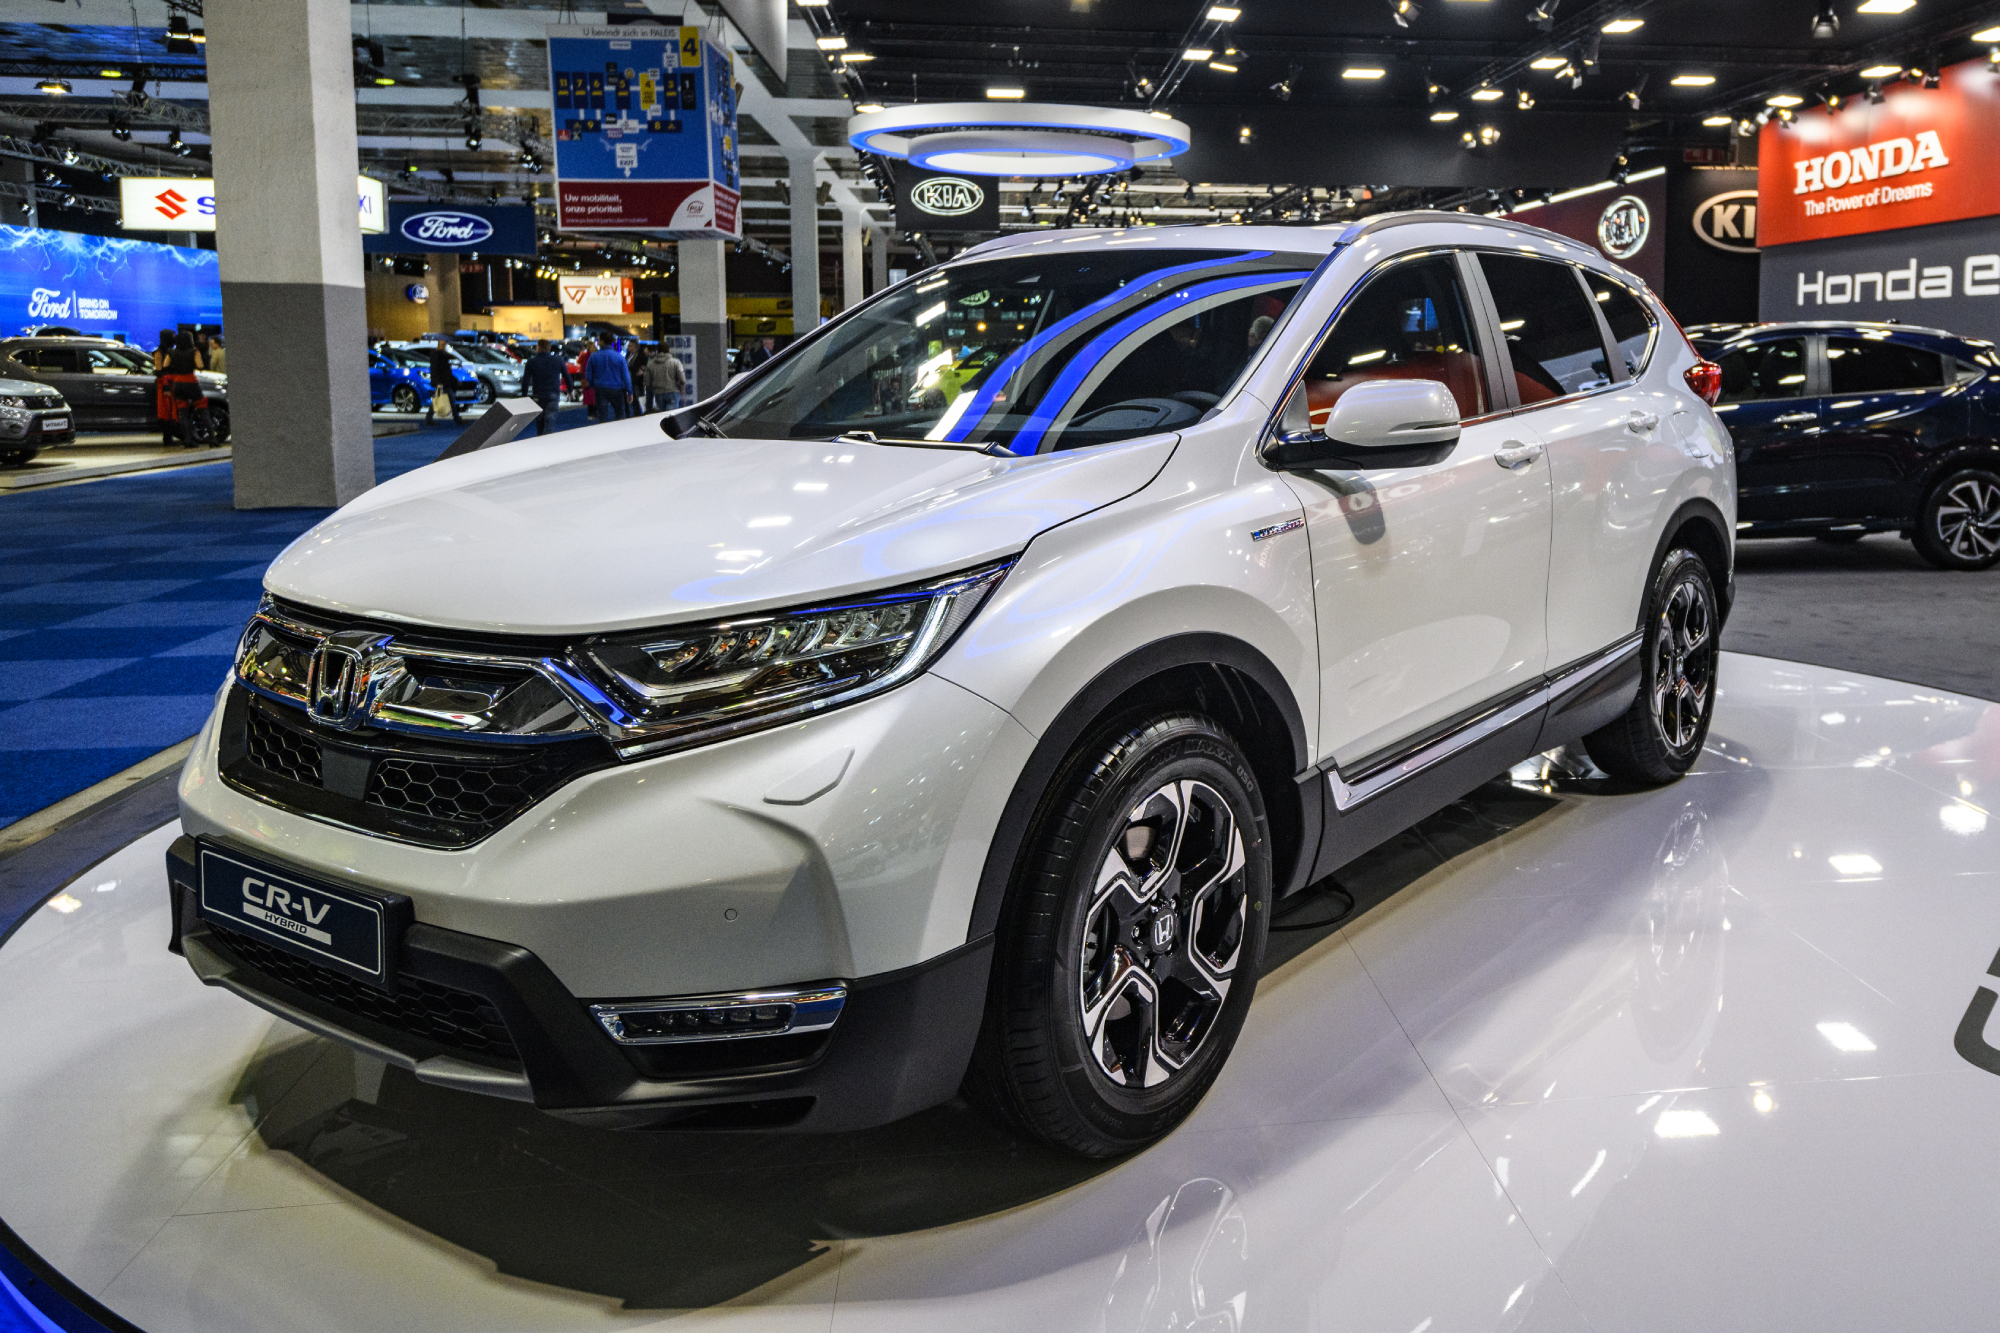 The Honda CR-V Hybrid is a Consumer Reports pick